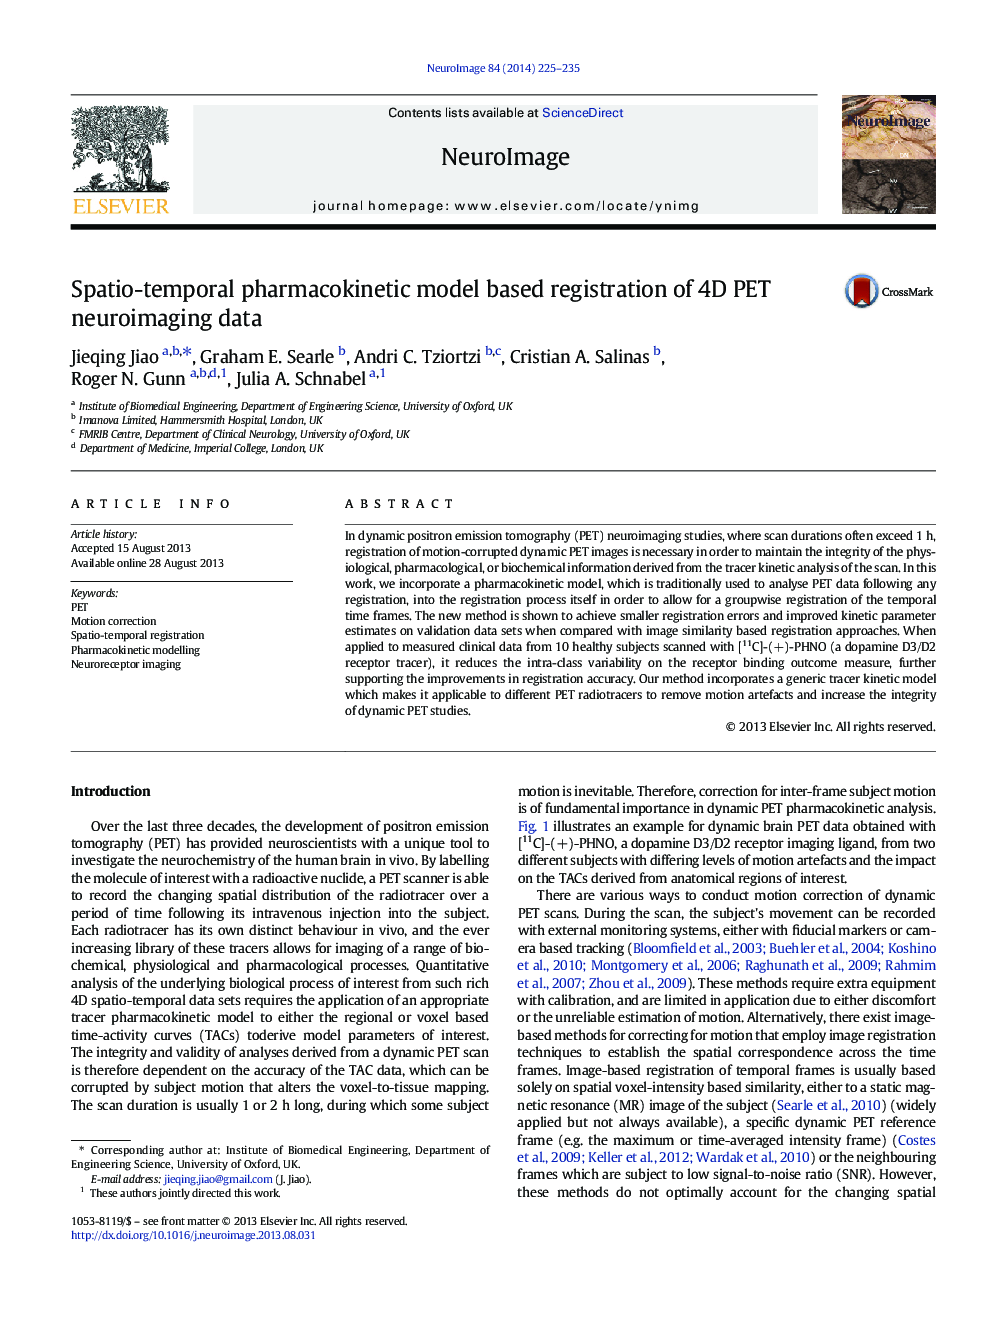 Spatio-temporal pharmacokinetic model based registration of 4D PET neuroimaging data